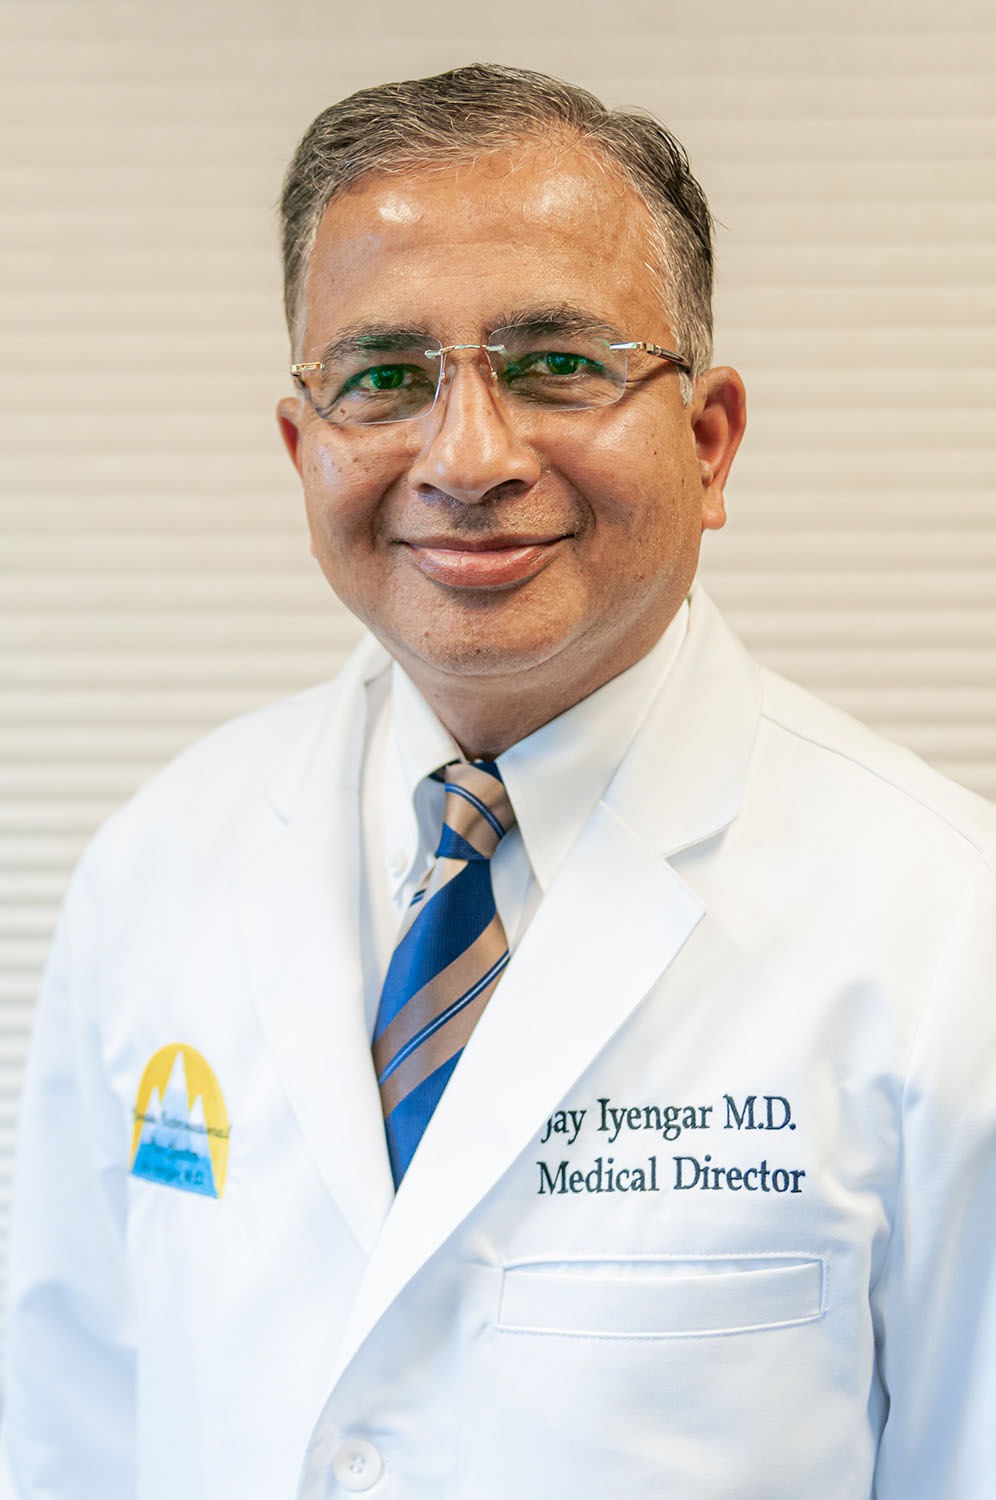 Dr. Iyengar